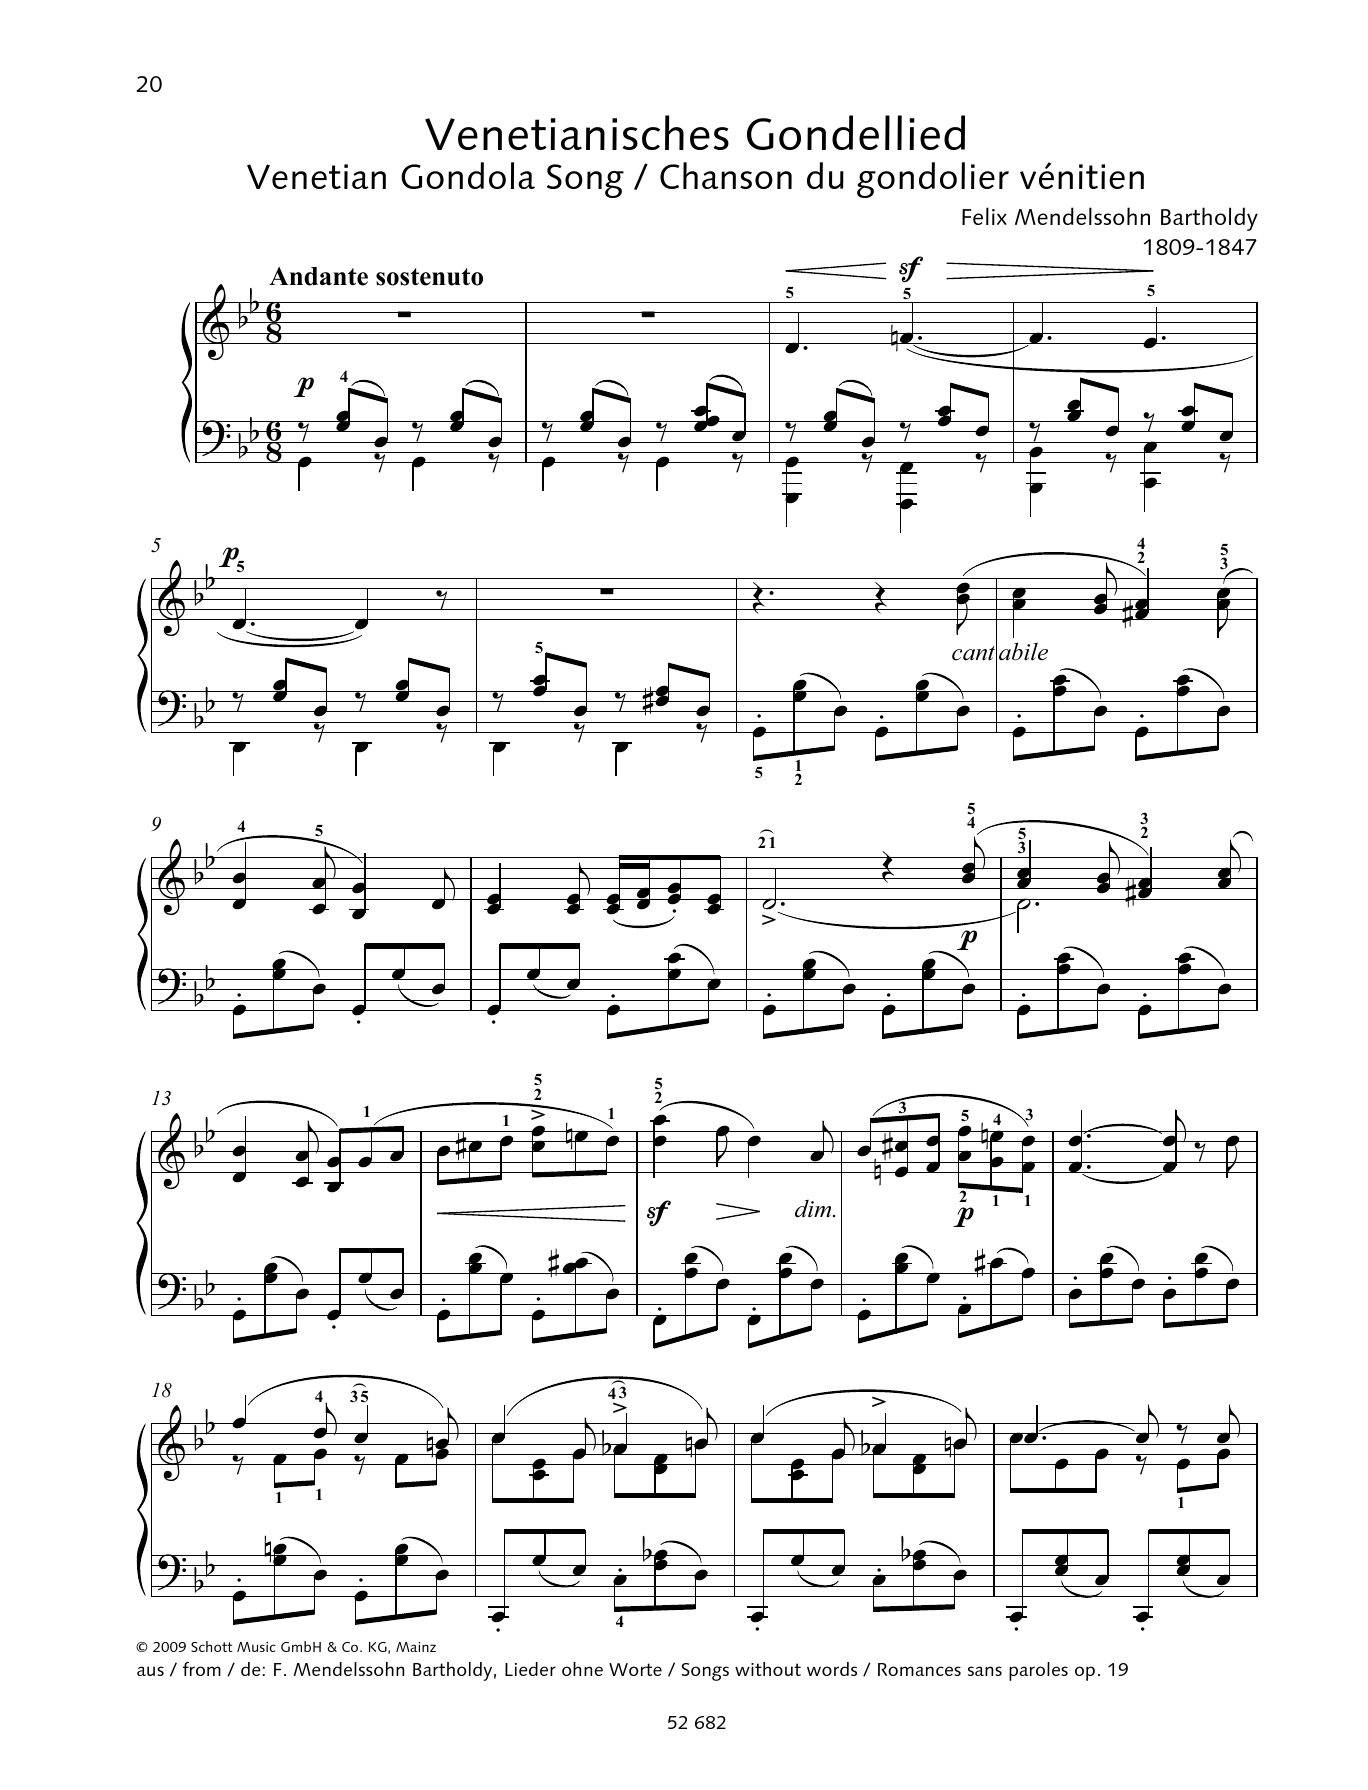 Felix Mendelssohn Bartholdy Venetian Gondola Song in G minor sheet music notes and chords arranged for Piano Solo